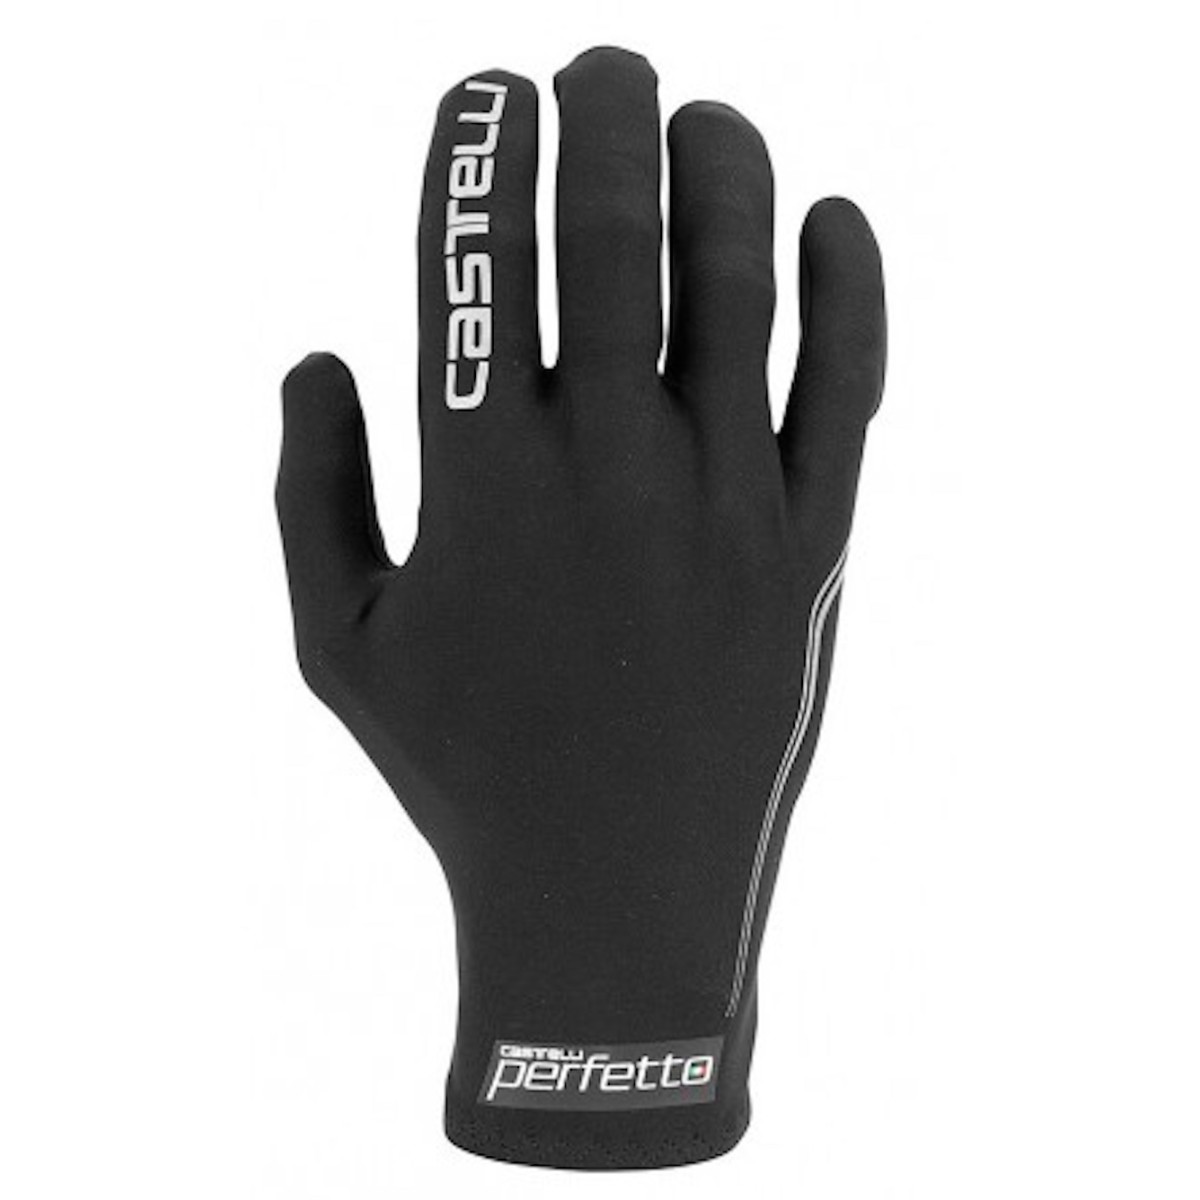 CASTELLI PERFETTO LIGHT long gloves - black